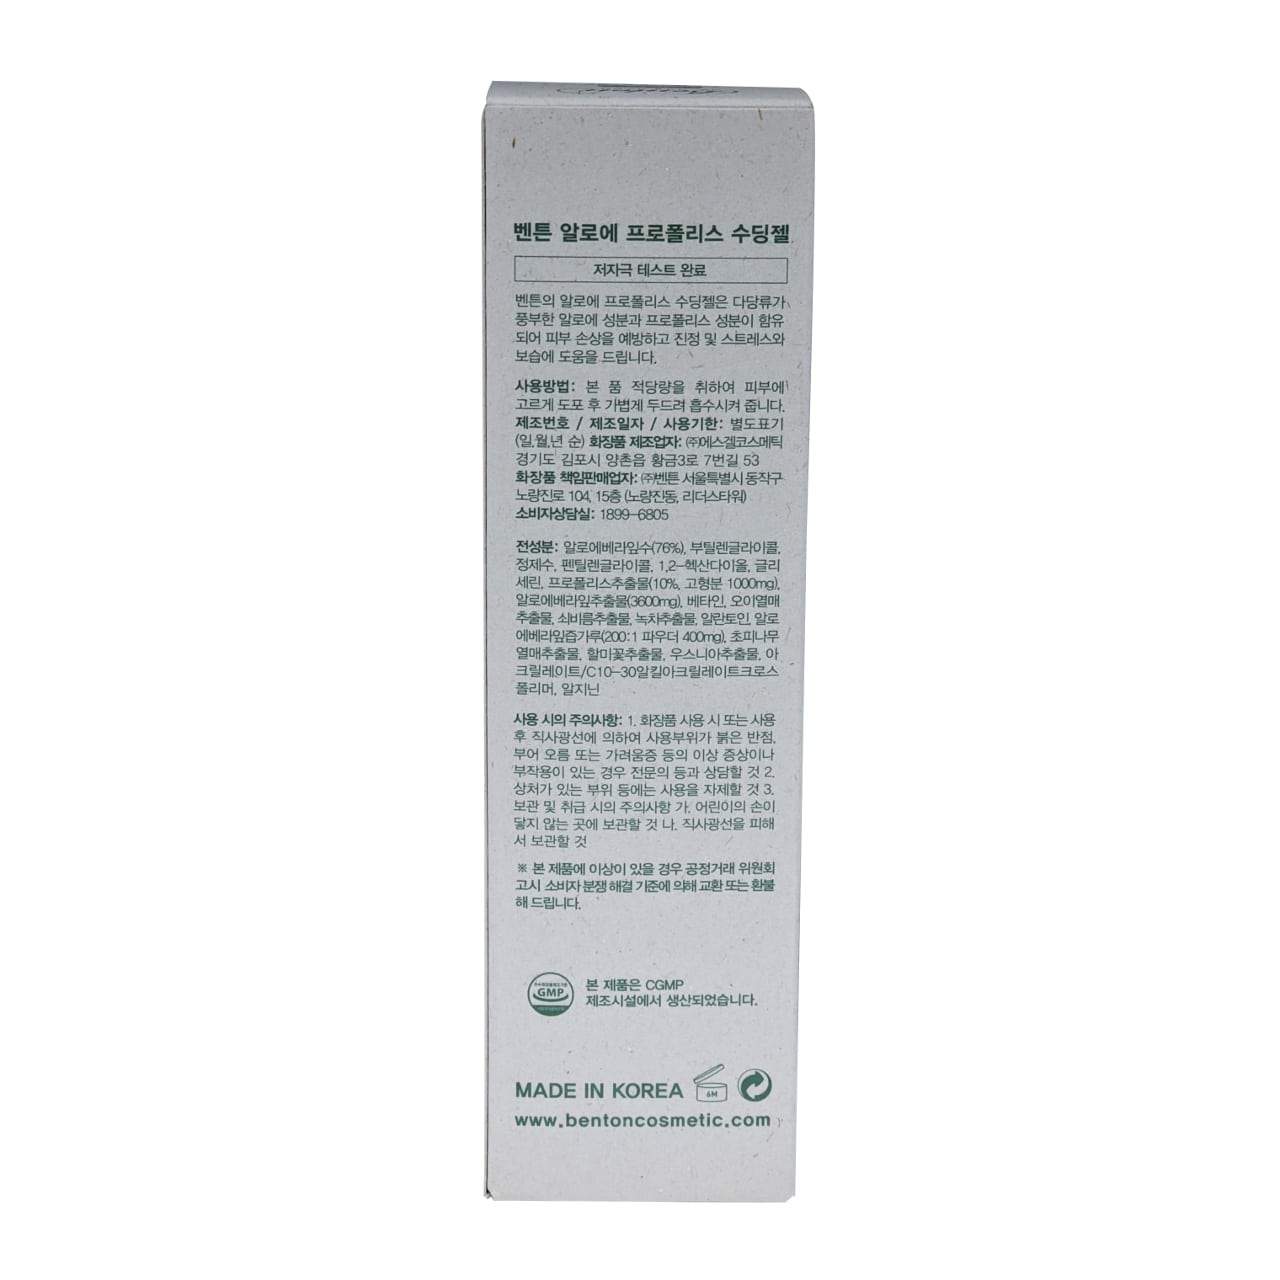 Product details for Benton Aloe Propolis Soothing Gel in Korean